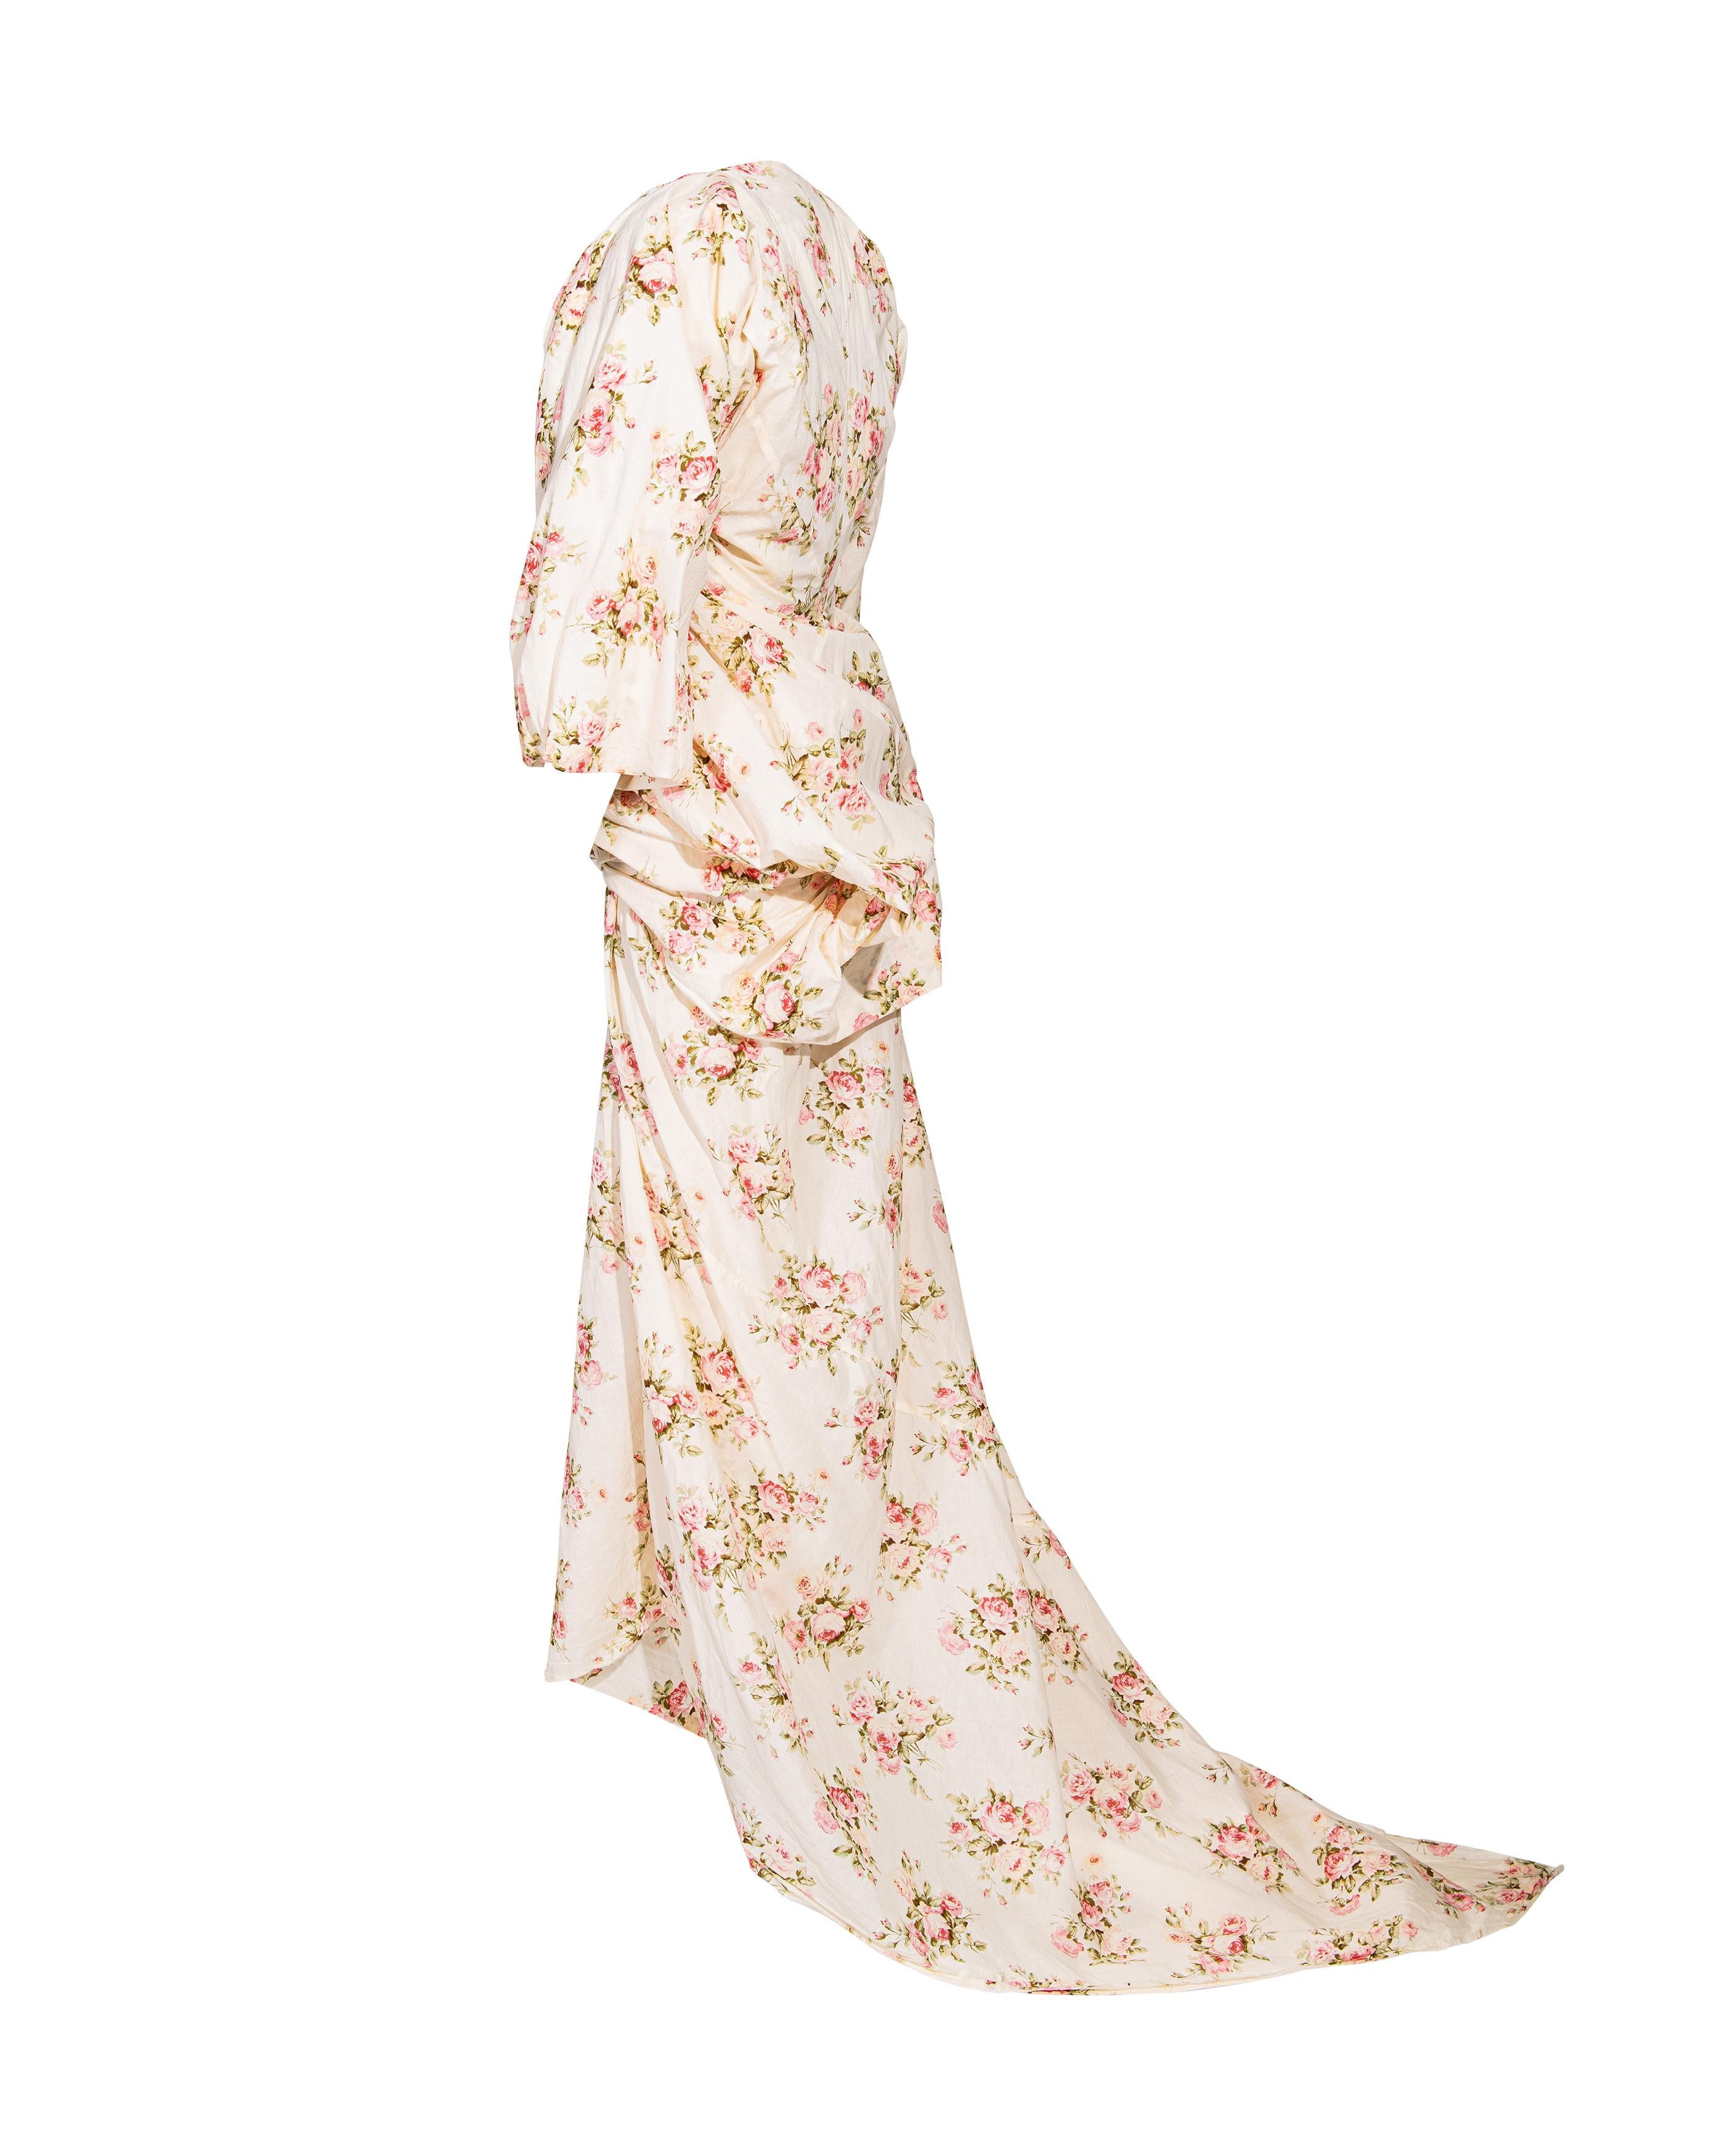 S/S 2008 Junya Watanabe Ecru Cotton Dress with Pink Floral Pattern 1